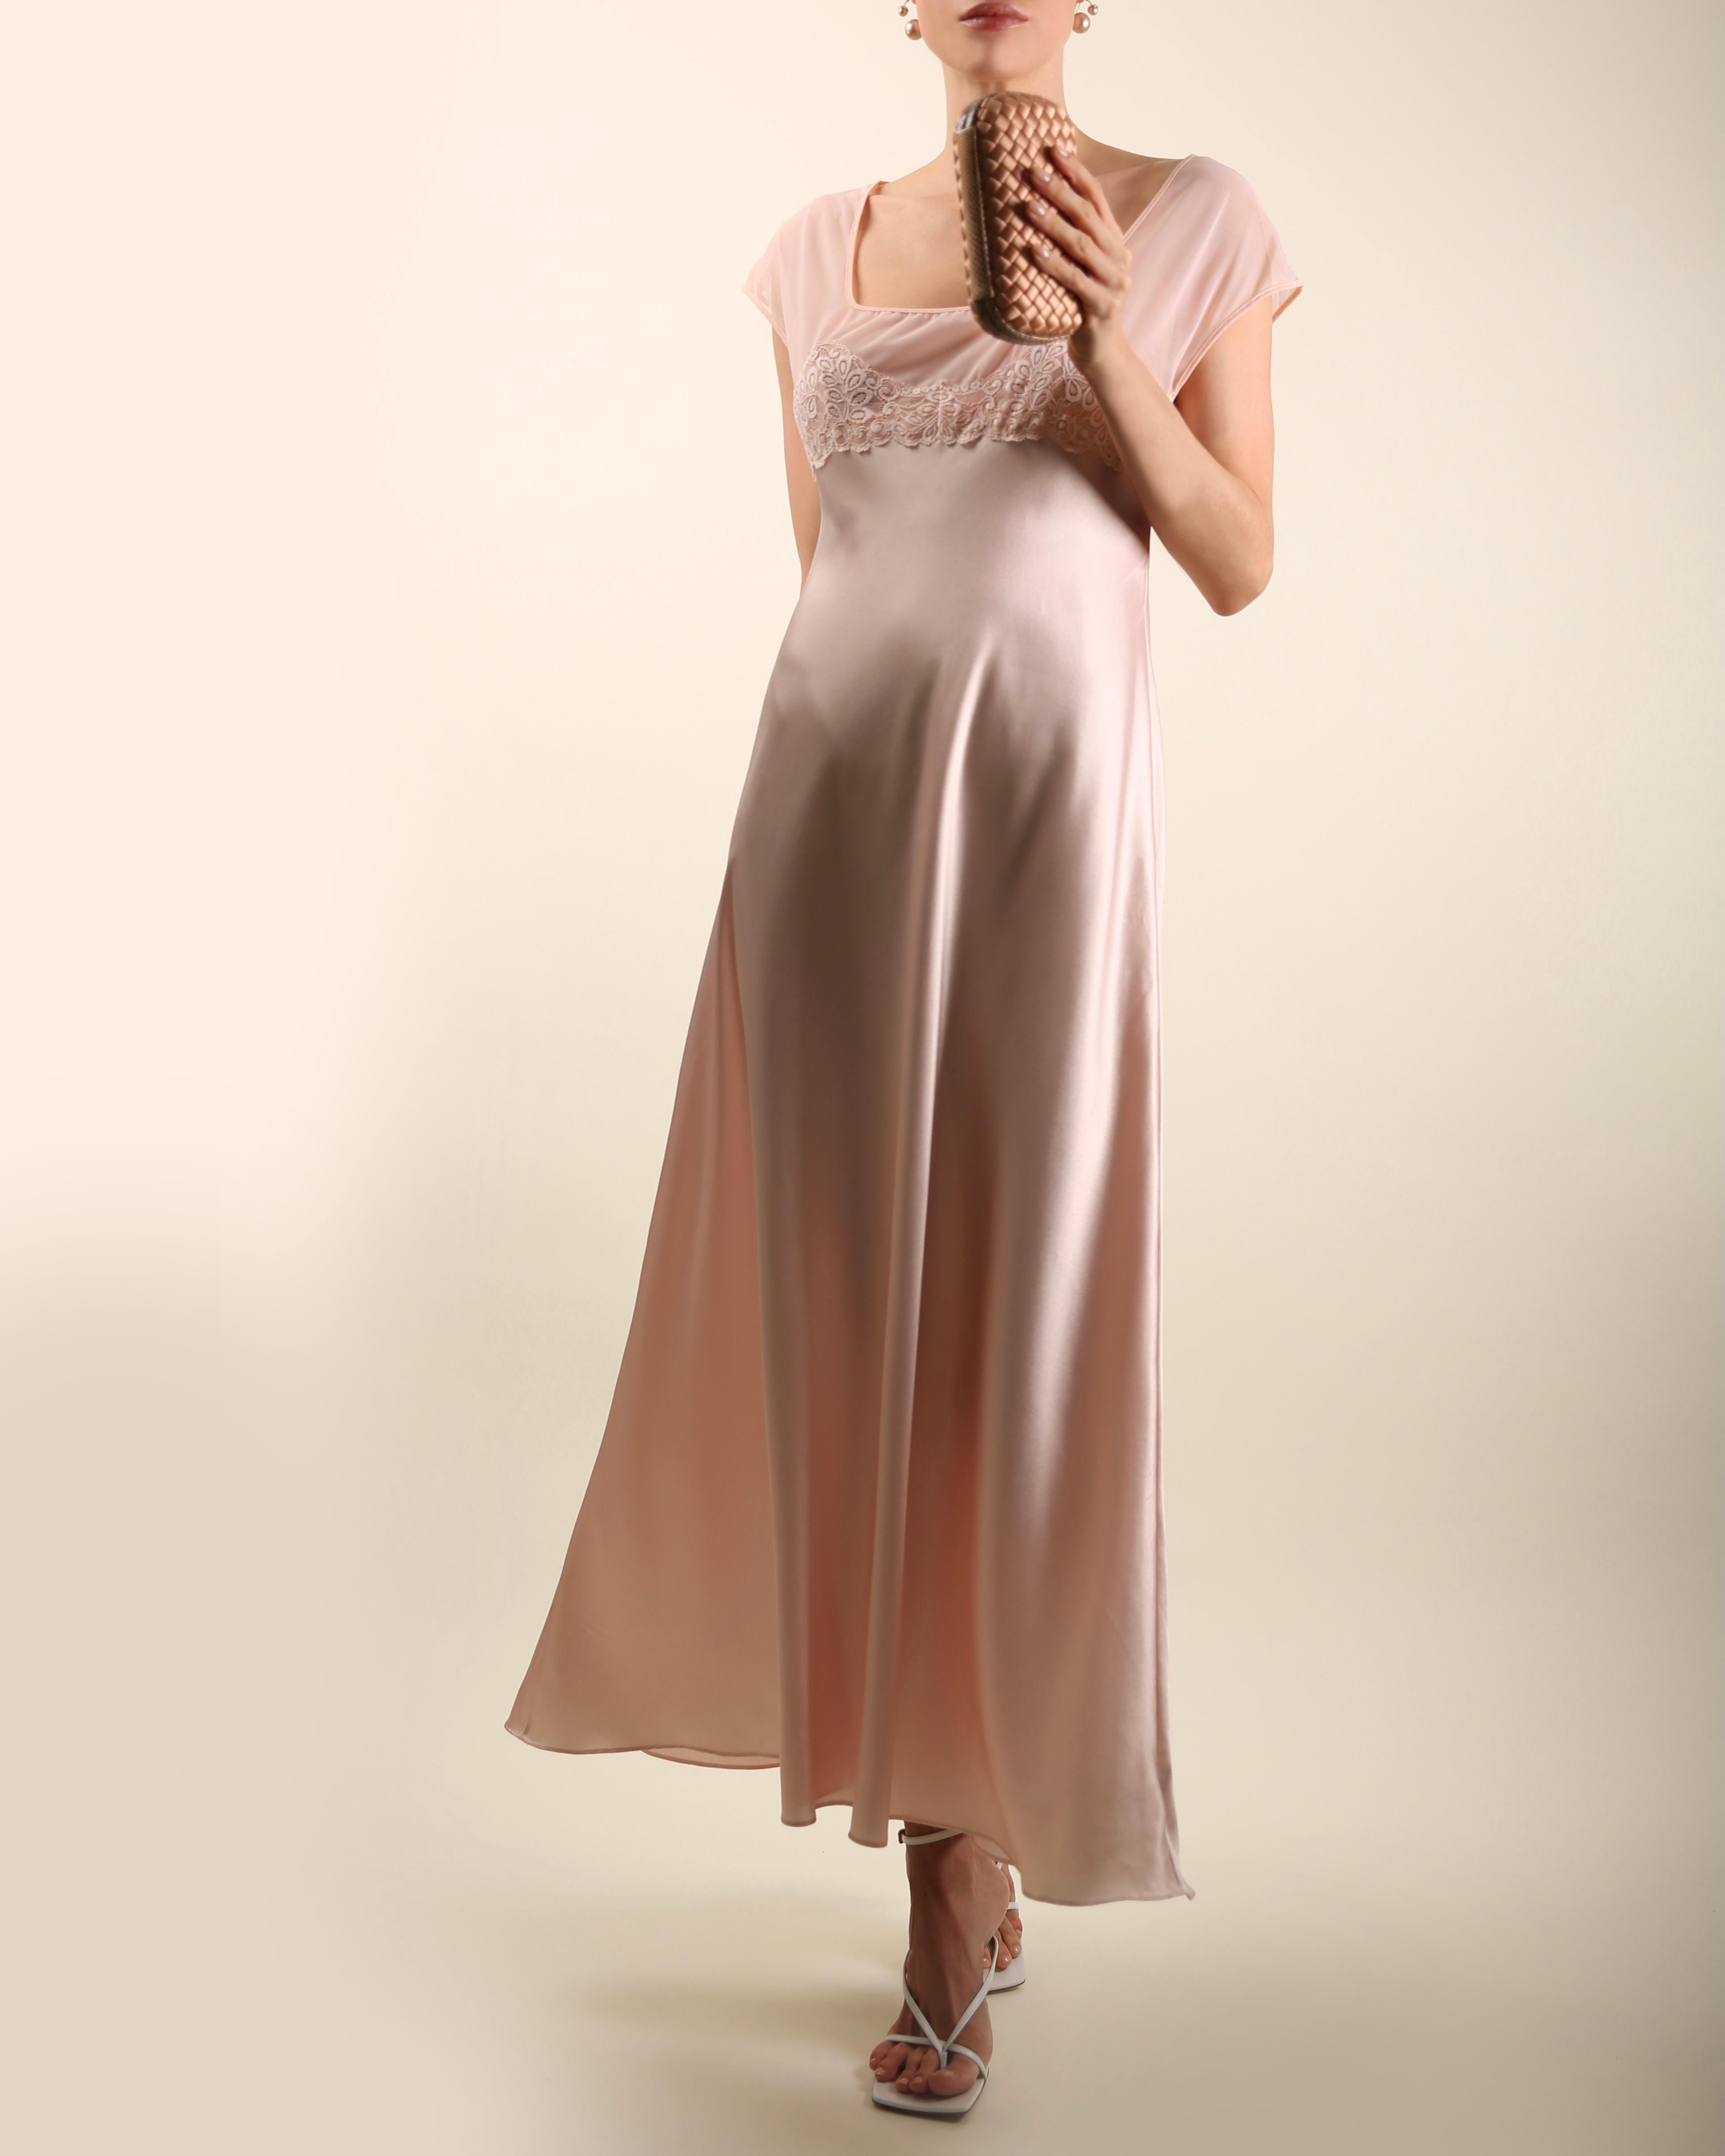 Women's Valentino Intimo vintage pink satin sheer lace slip robe night gown midi dress 